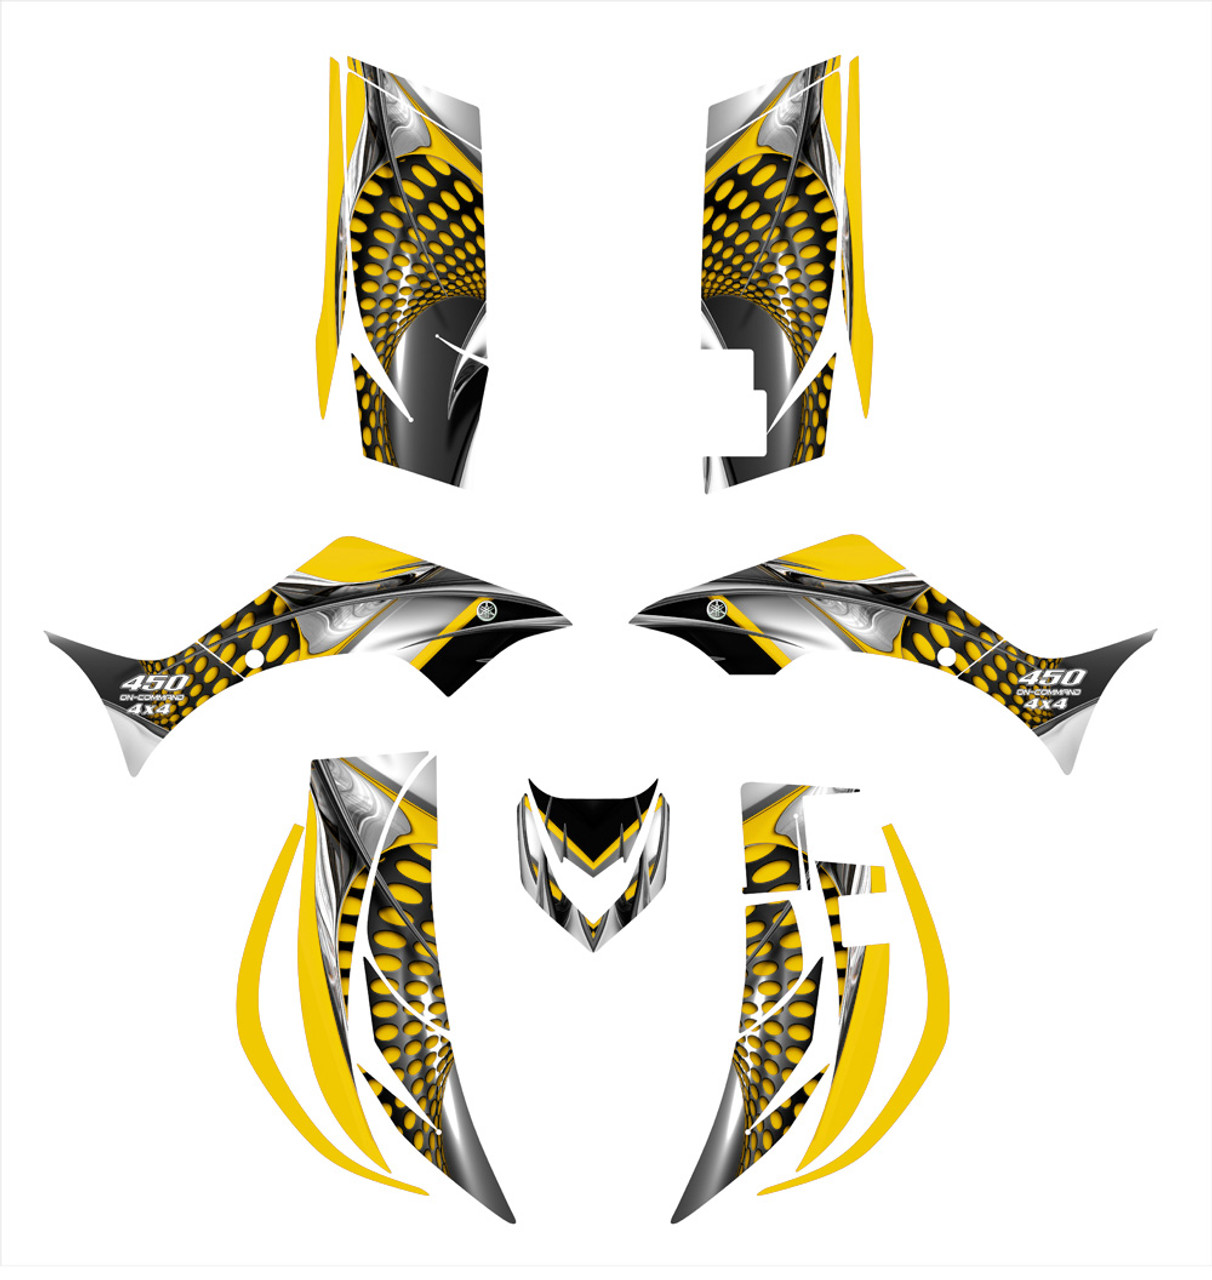 Yamaha Wolverine 450 graphics designed by Allmotorgraphics